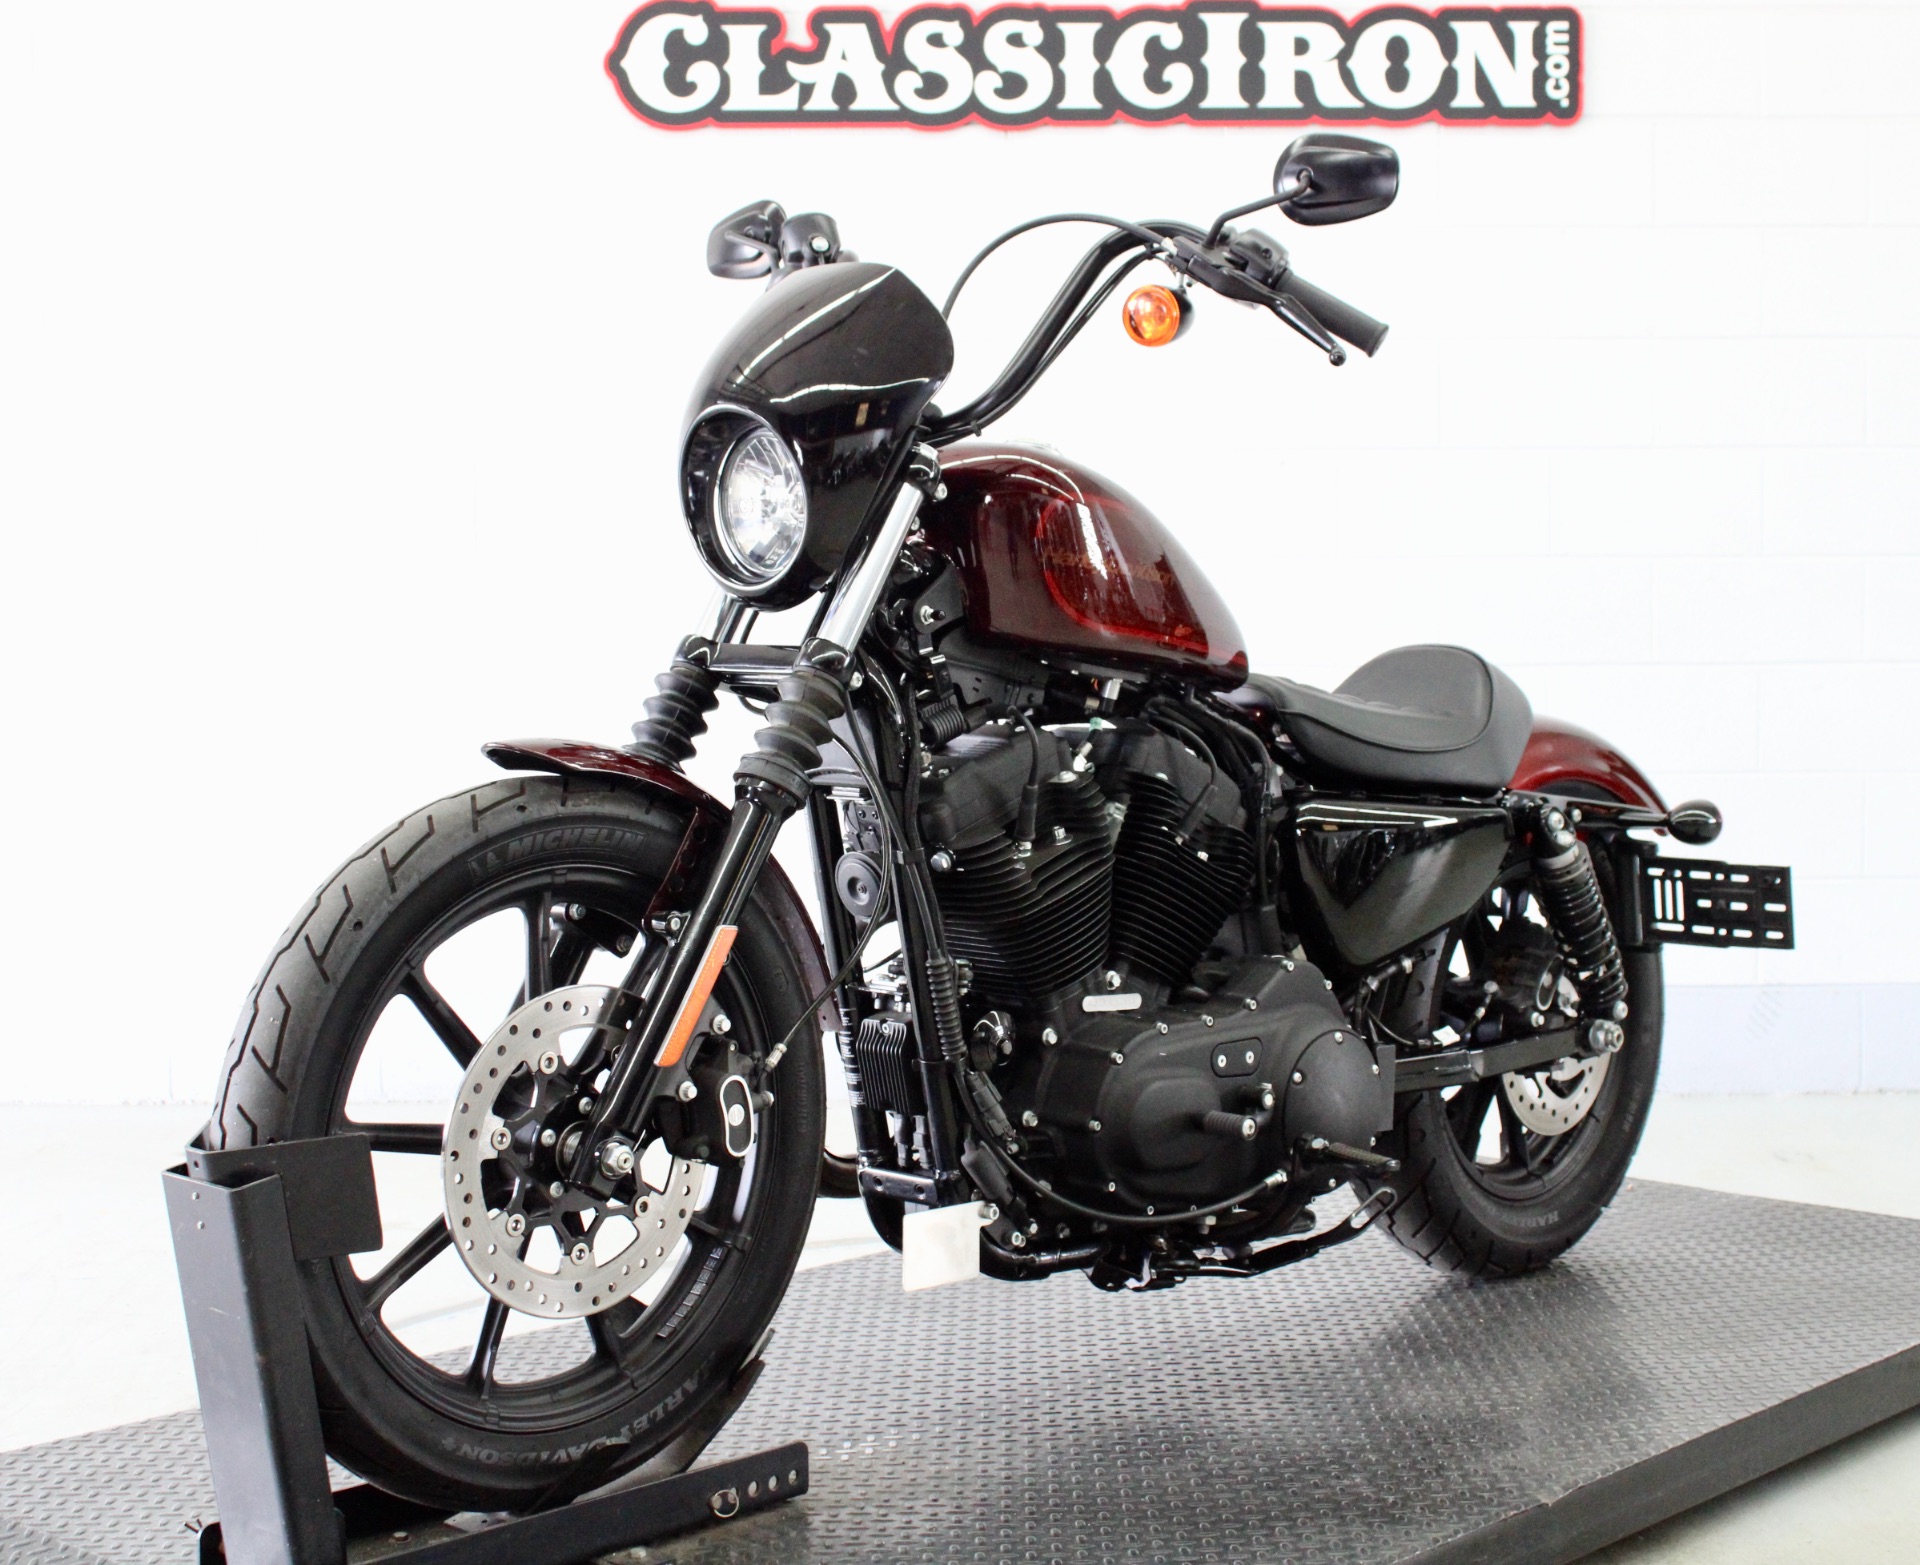 2019 Harley-Davidson Iron 1200™ in Fredericksburg, Virginia - Photo 3